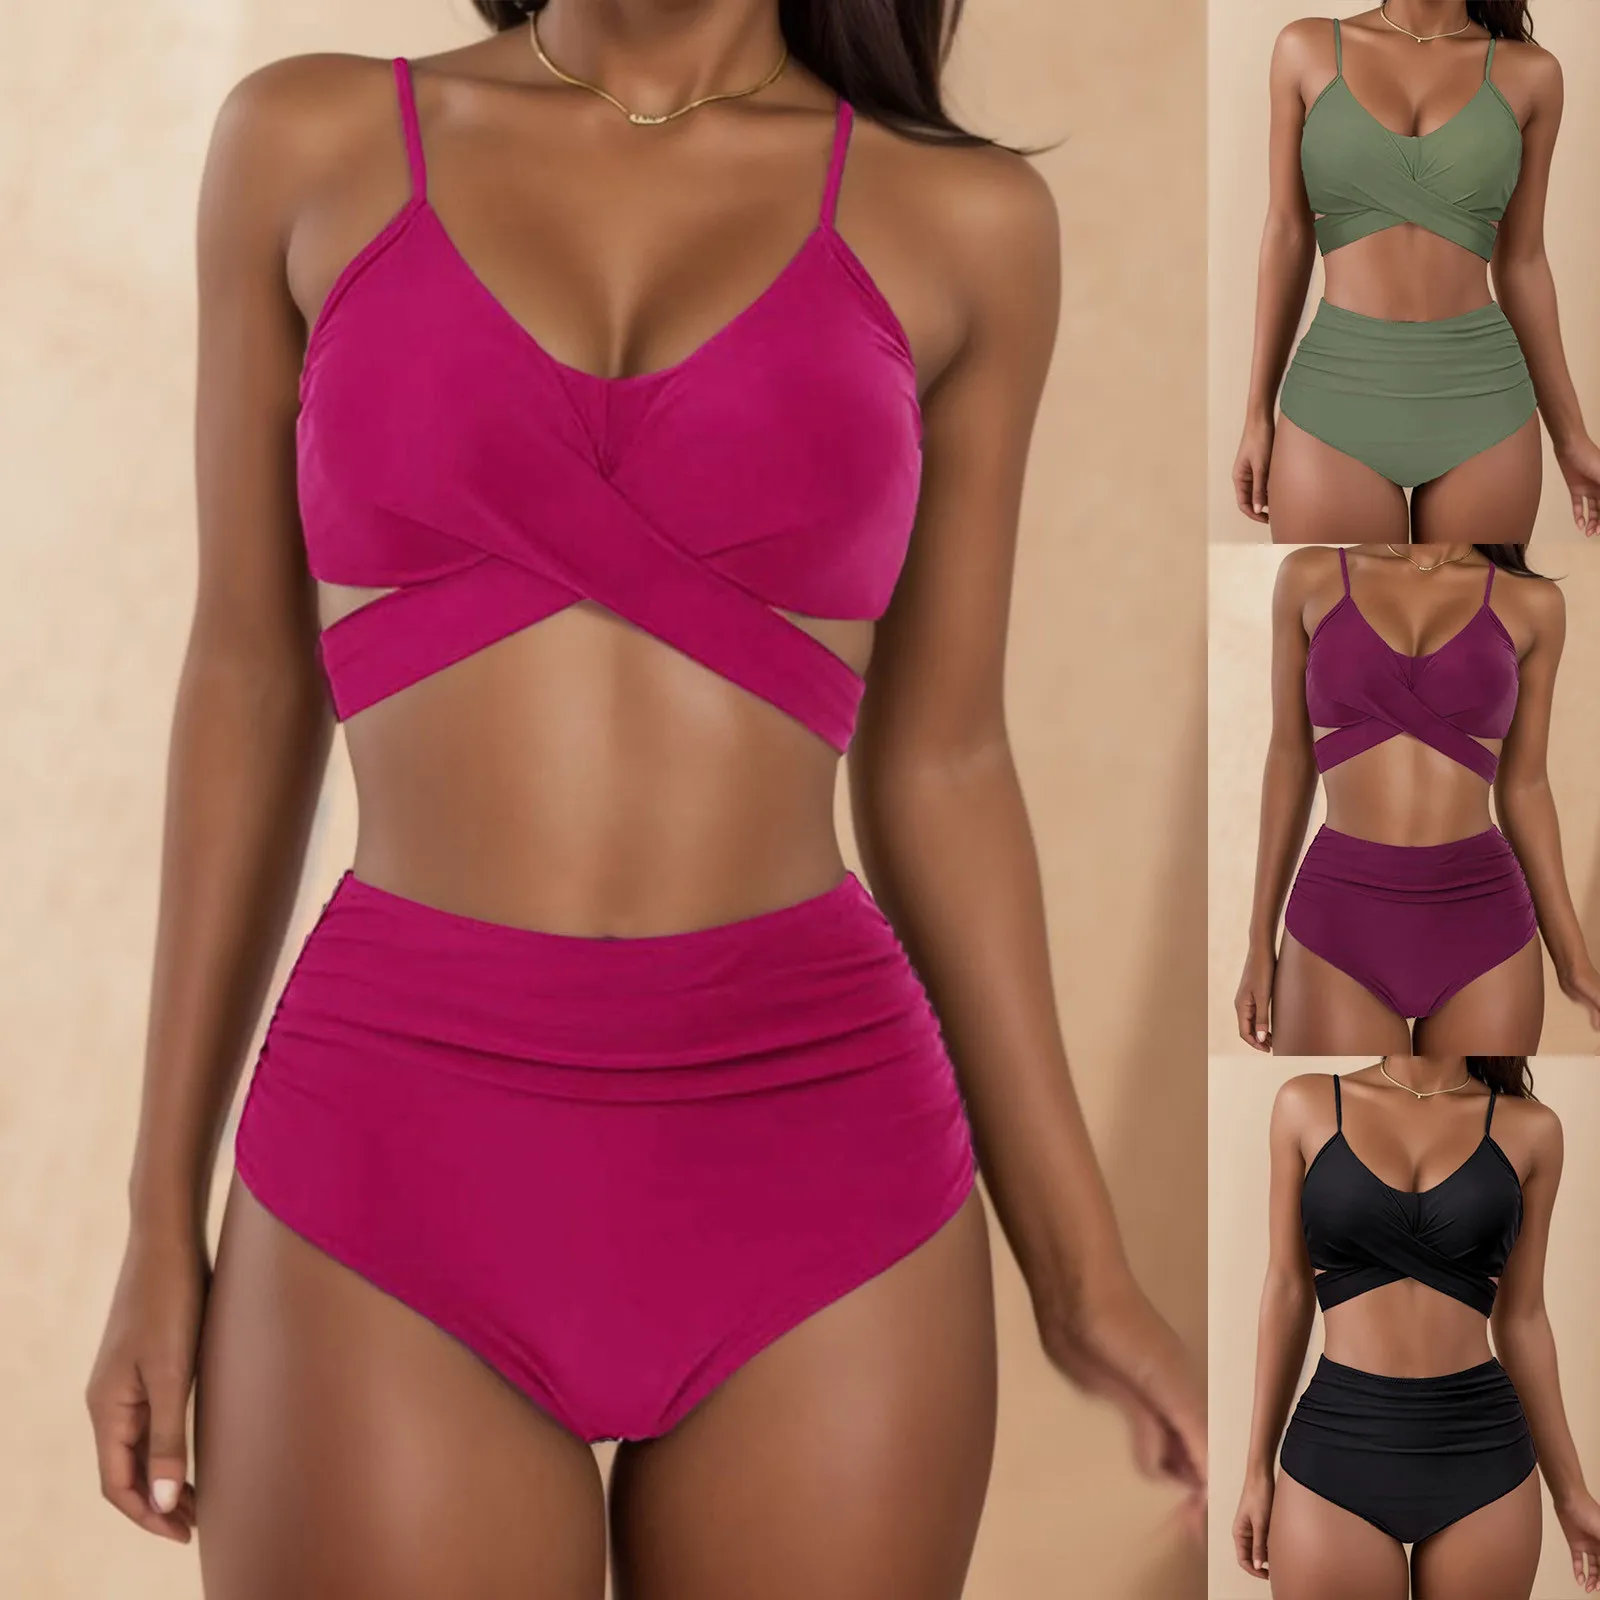 

Sexy High Waist Bikini Set Swimwear For Women Fashion Solid Tankini Swimsuit Summer Beach Vacation Fashion Swimwear купальник